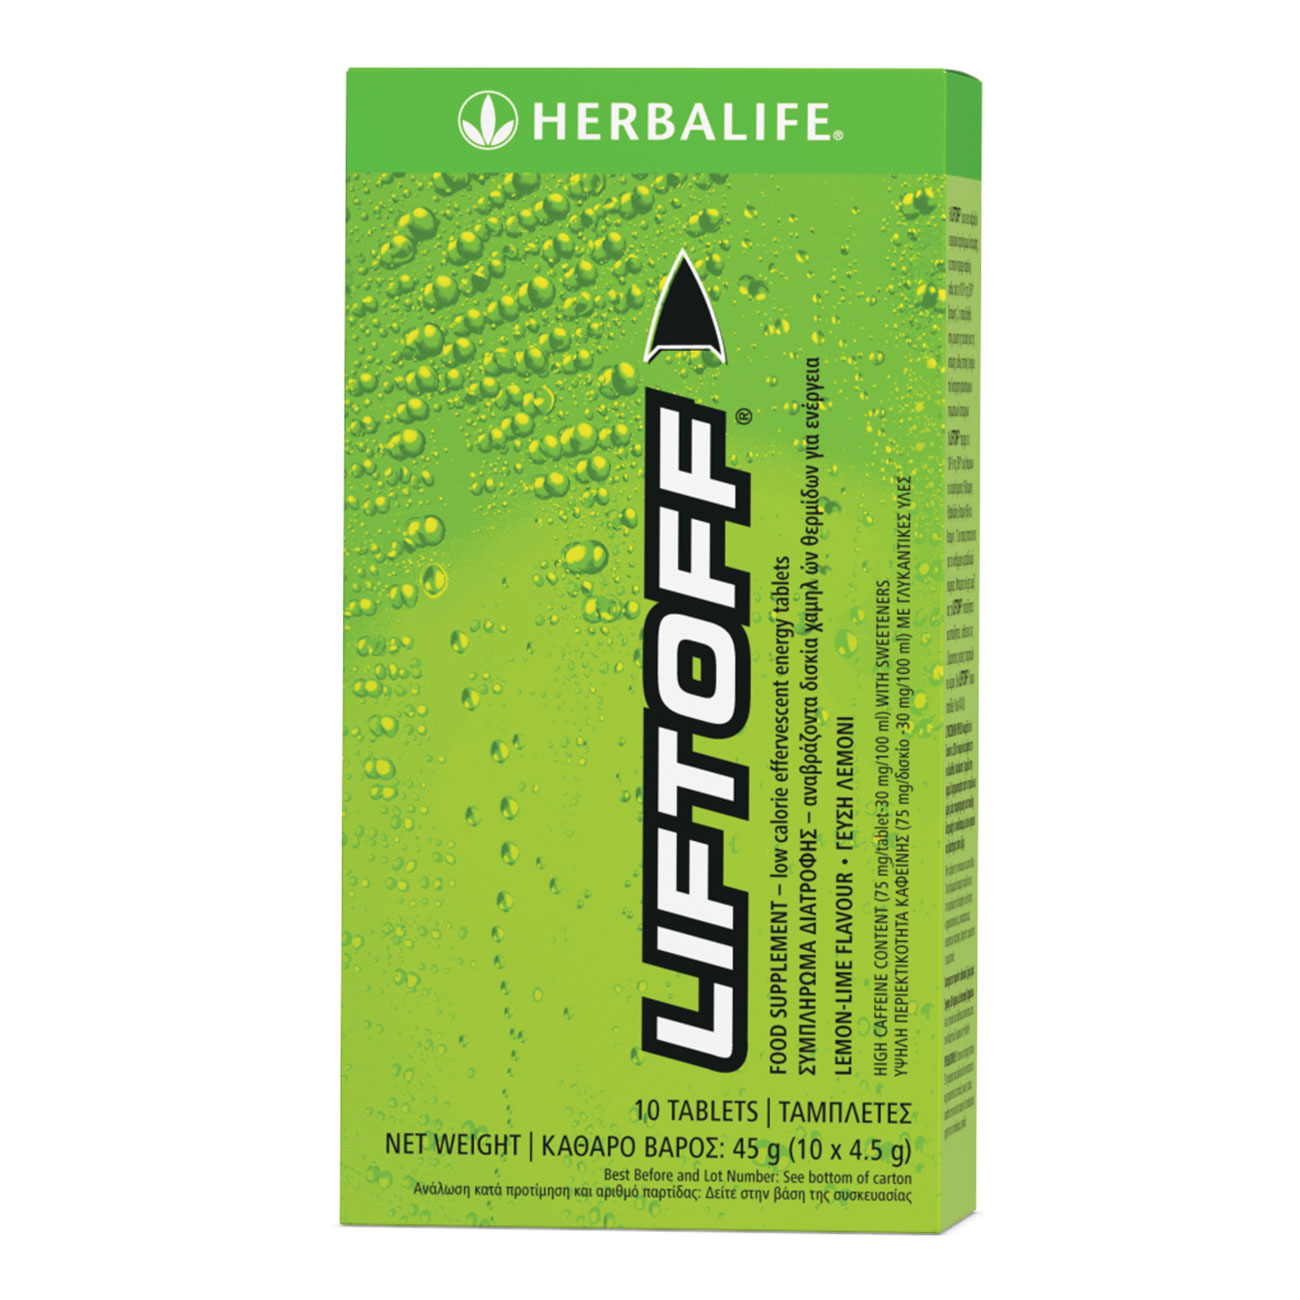 Lift Off® Energy Drink Lemon-Lime product shot